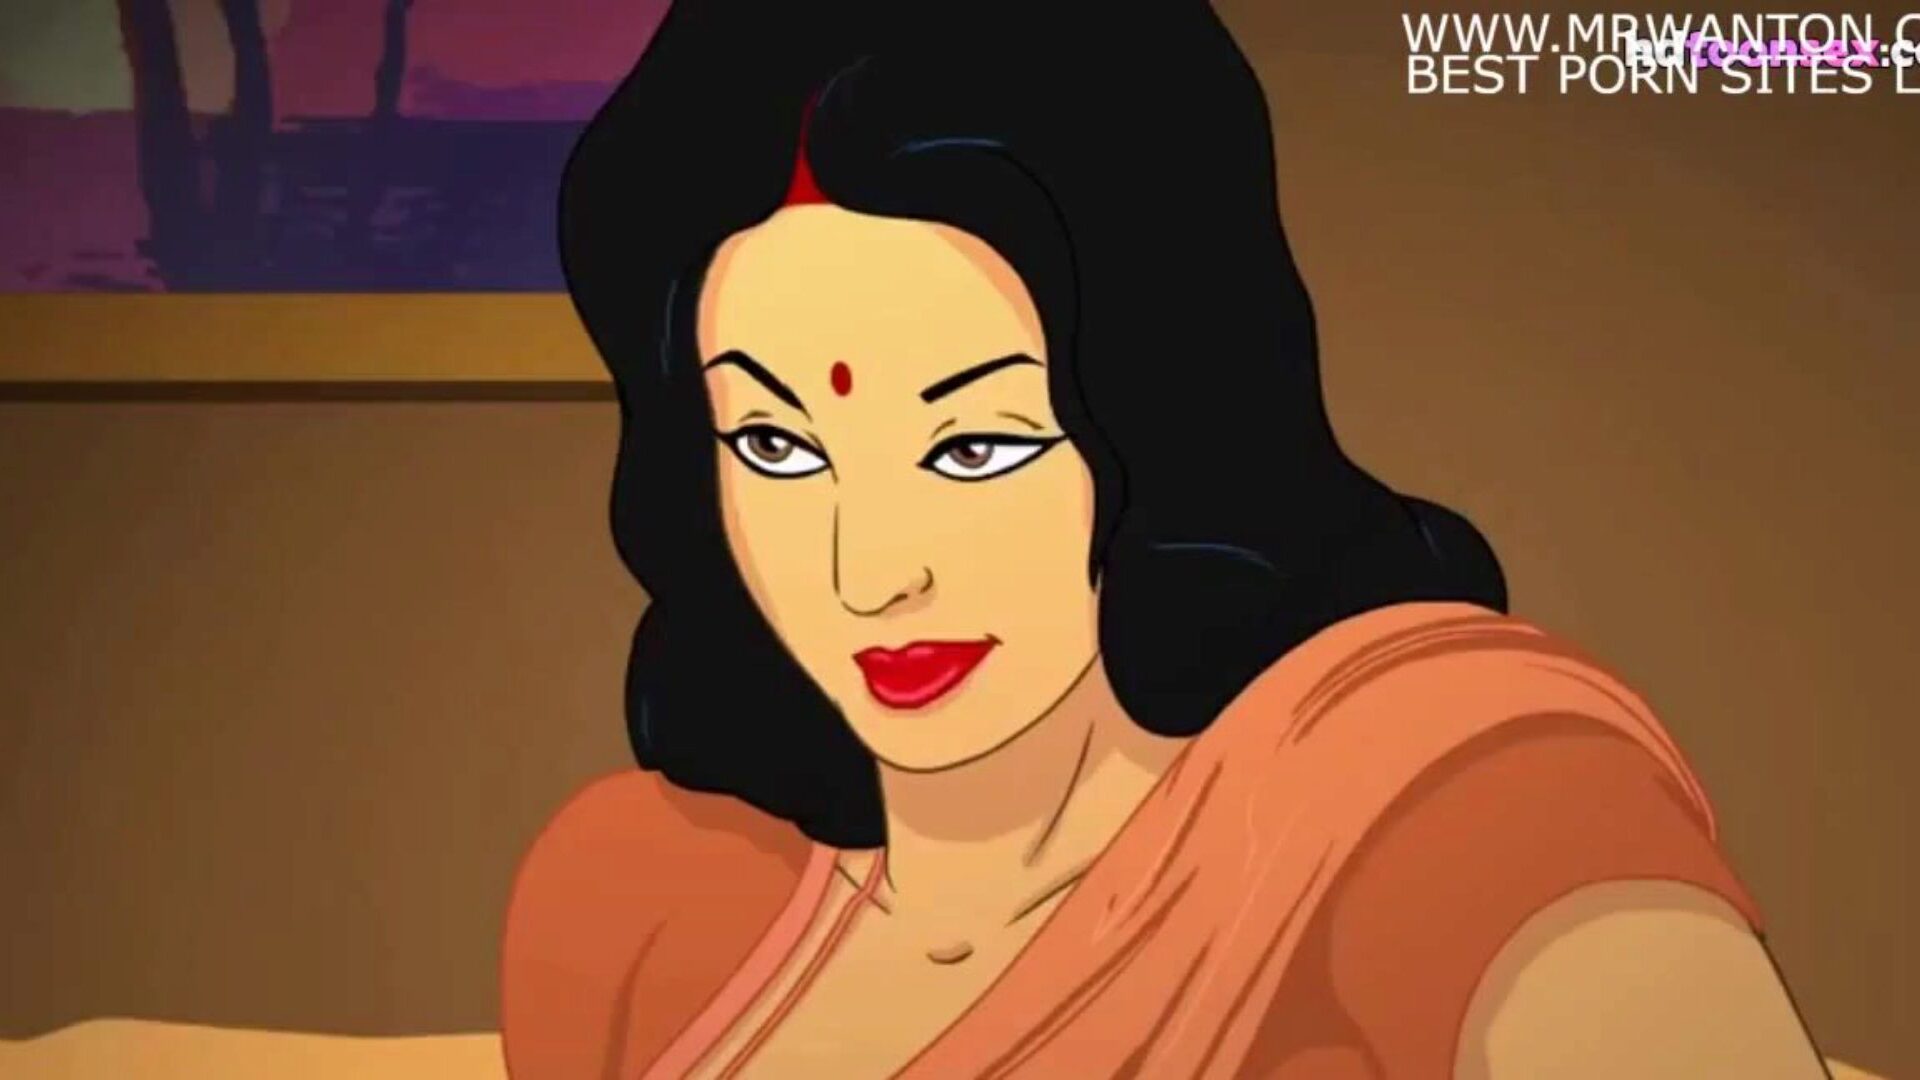 Indian hot hawt cartoon fuck-a-thon – Hindi Indian sexy hawt drawing fucky-fucky Hindi